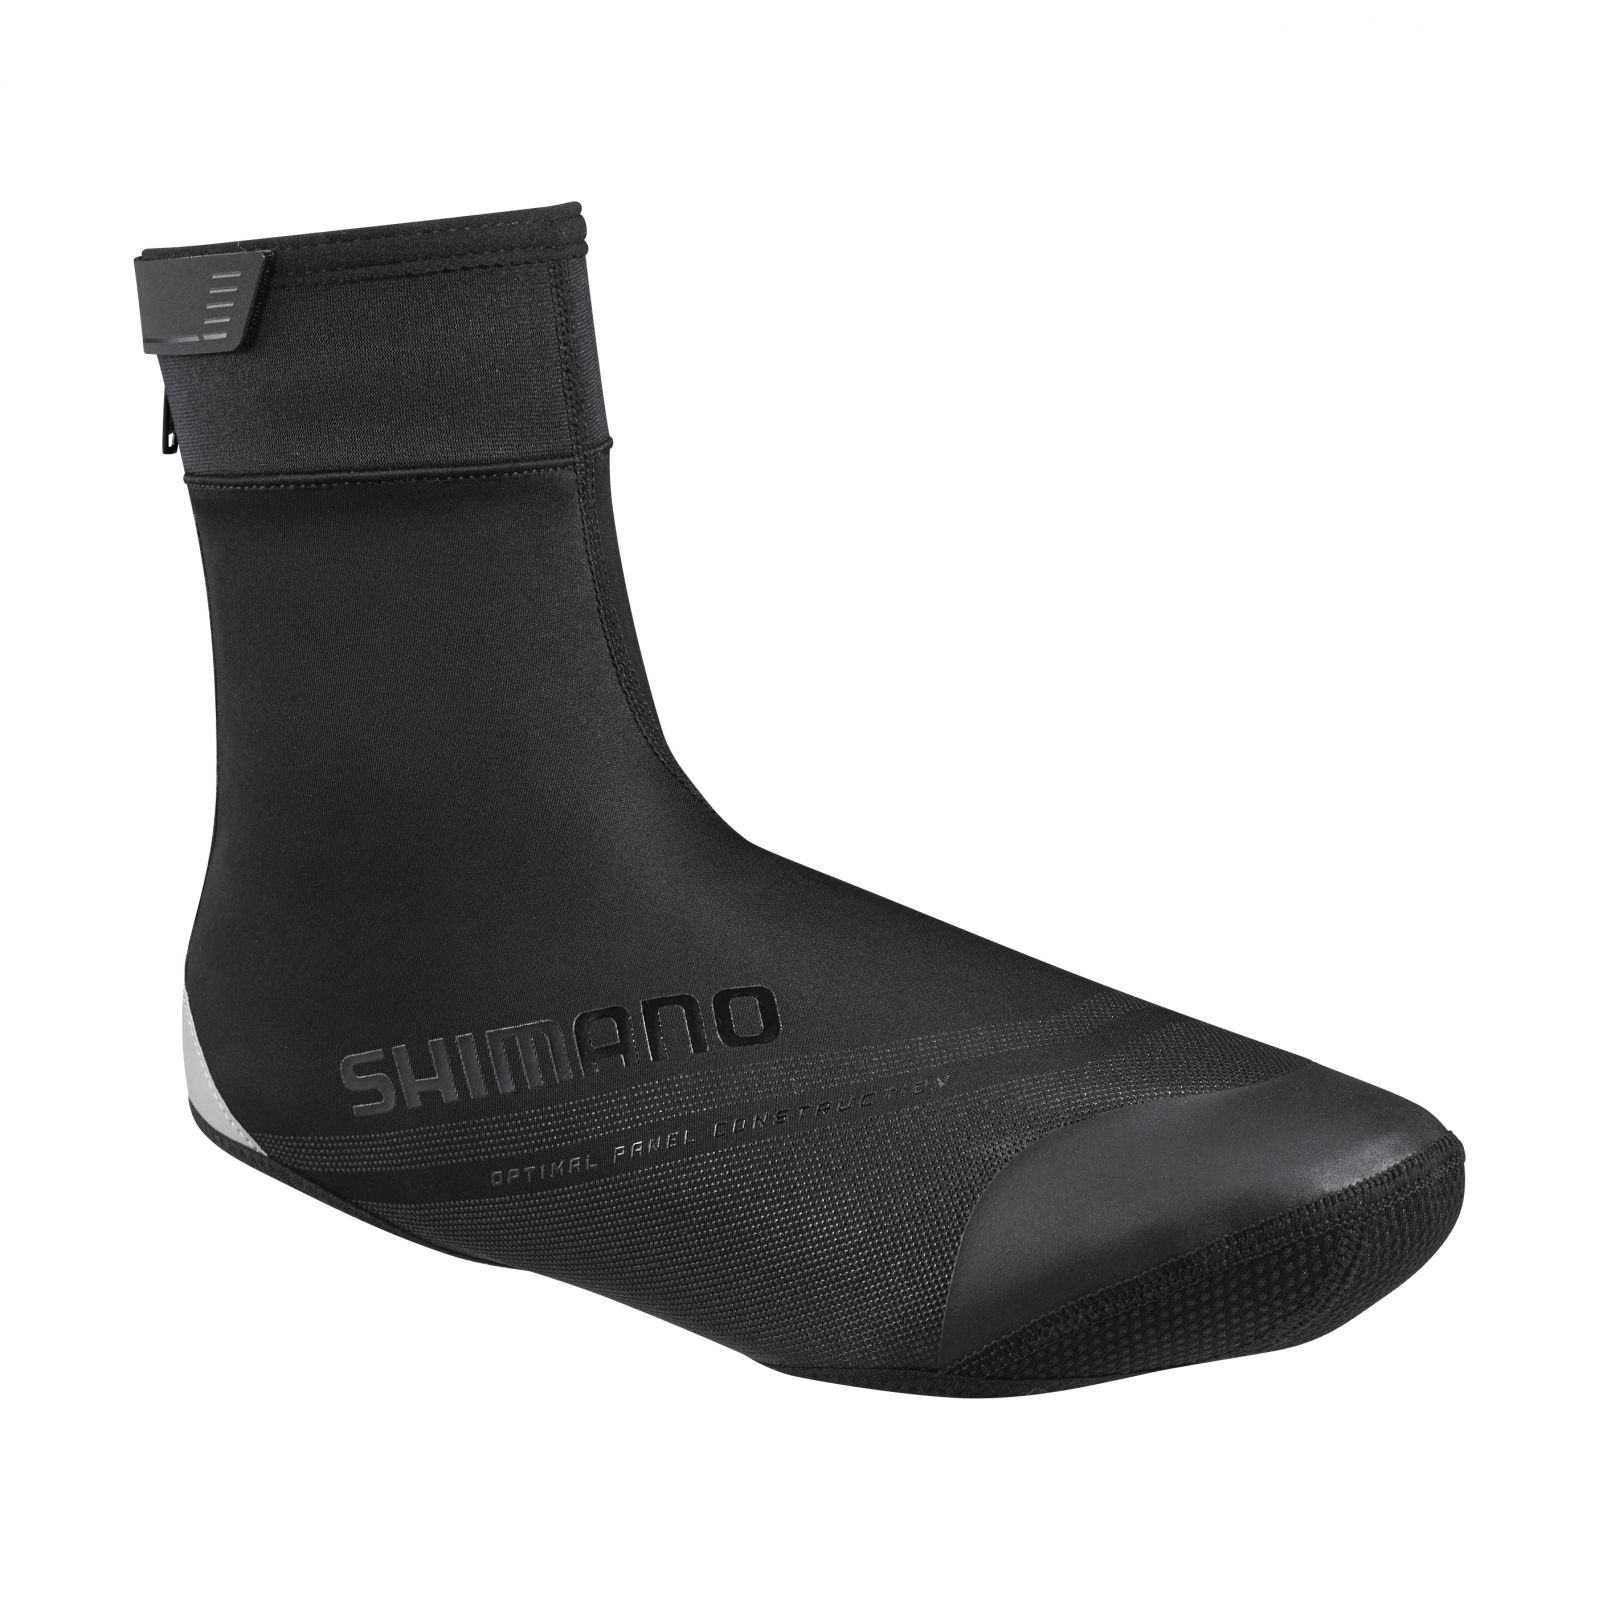 SHIMANO S1100R SOFT SHELL návleky na obuv (5-10°C), černá, XL (44-46)